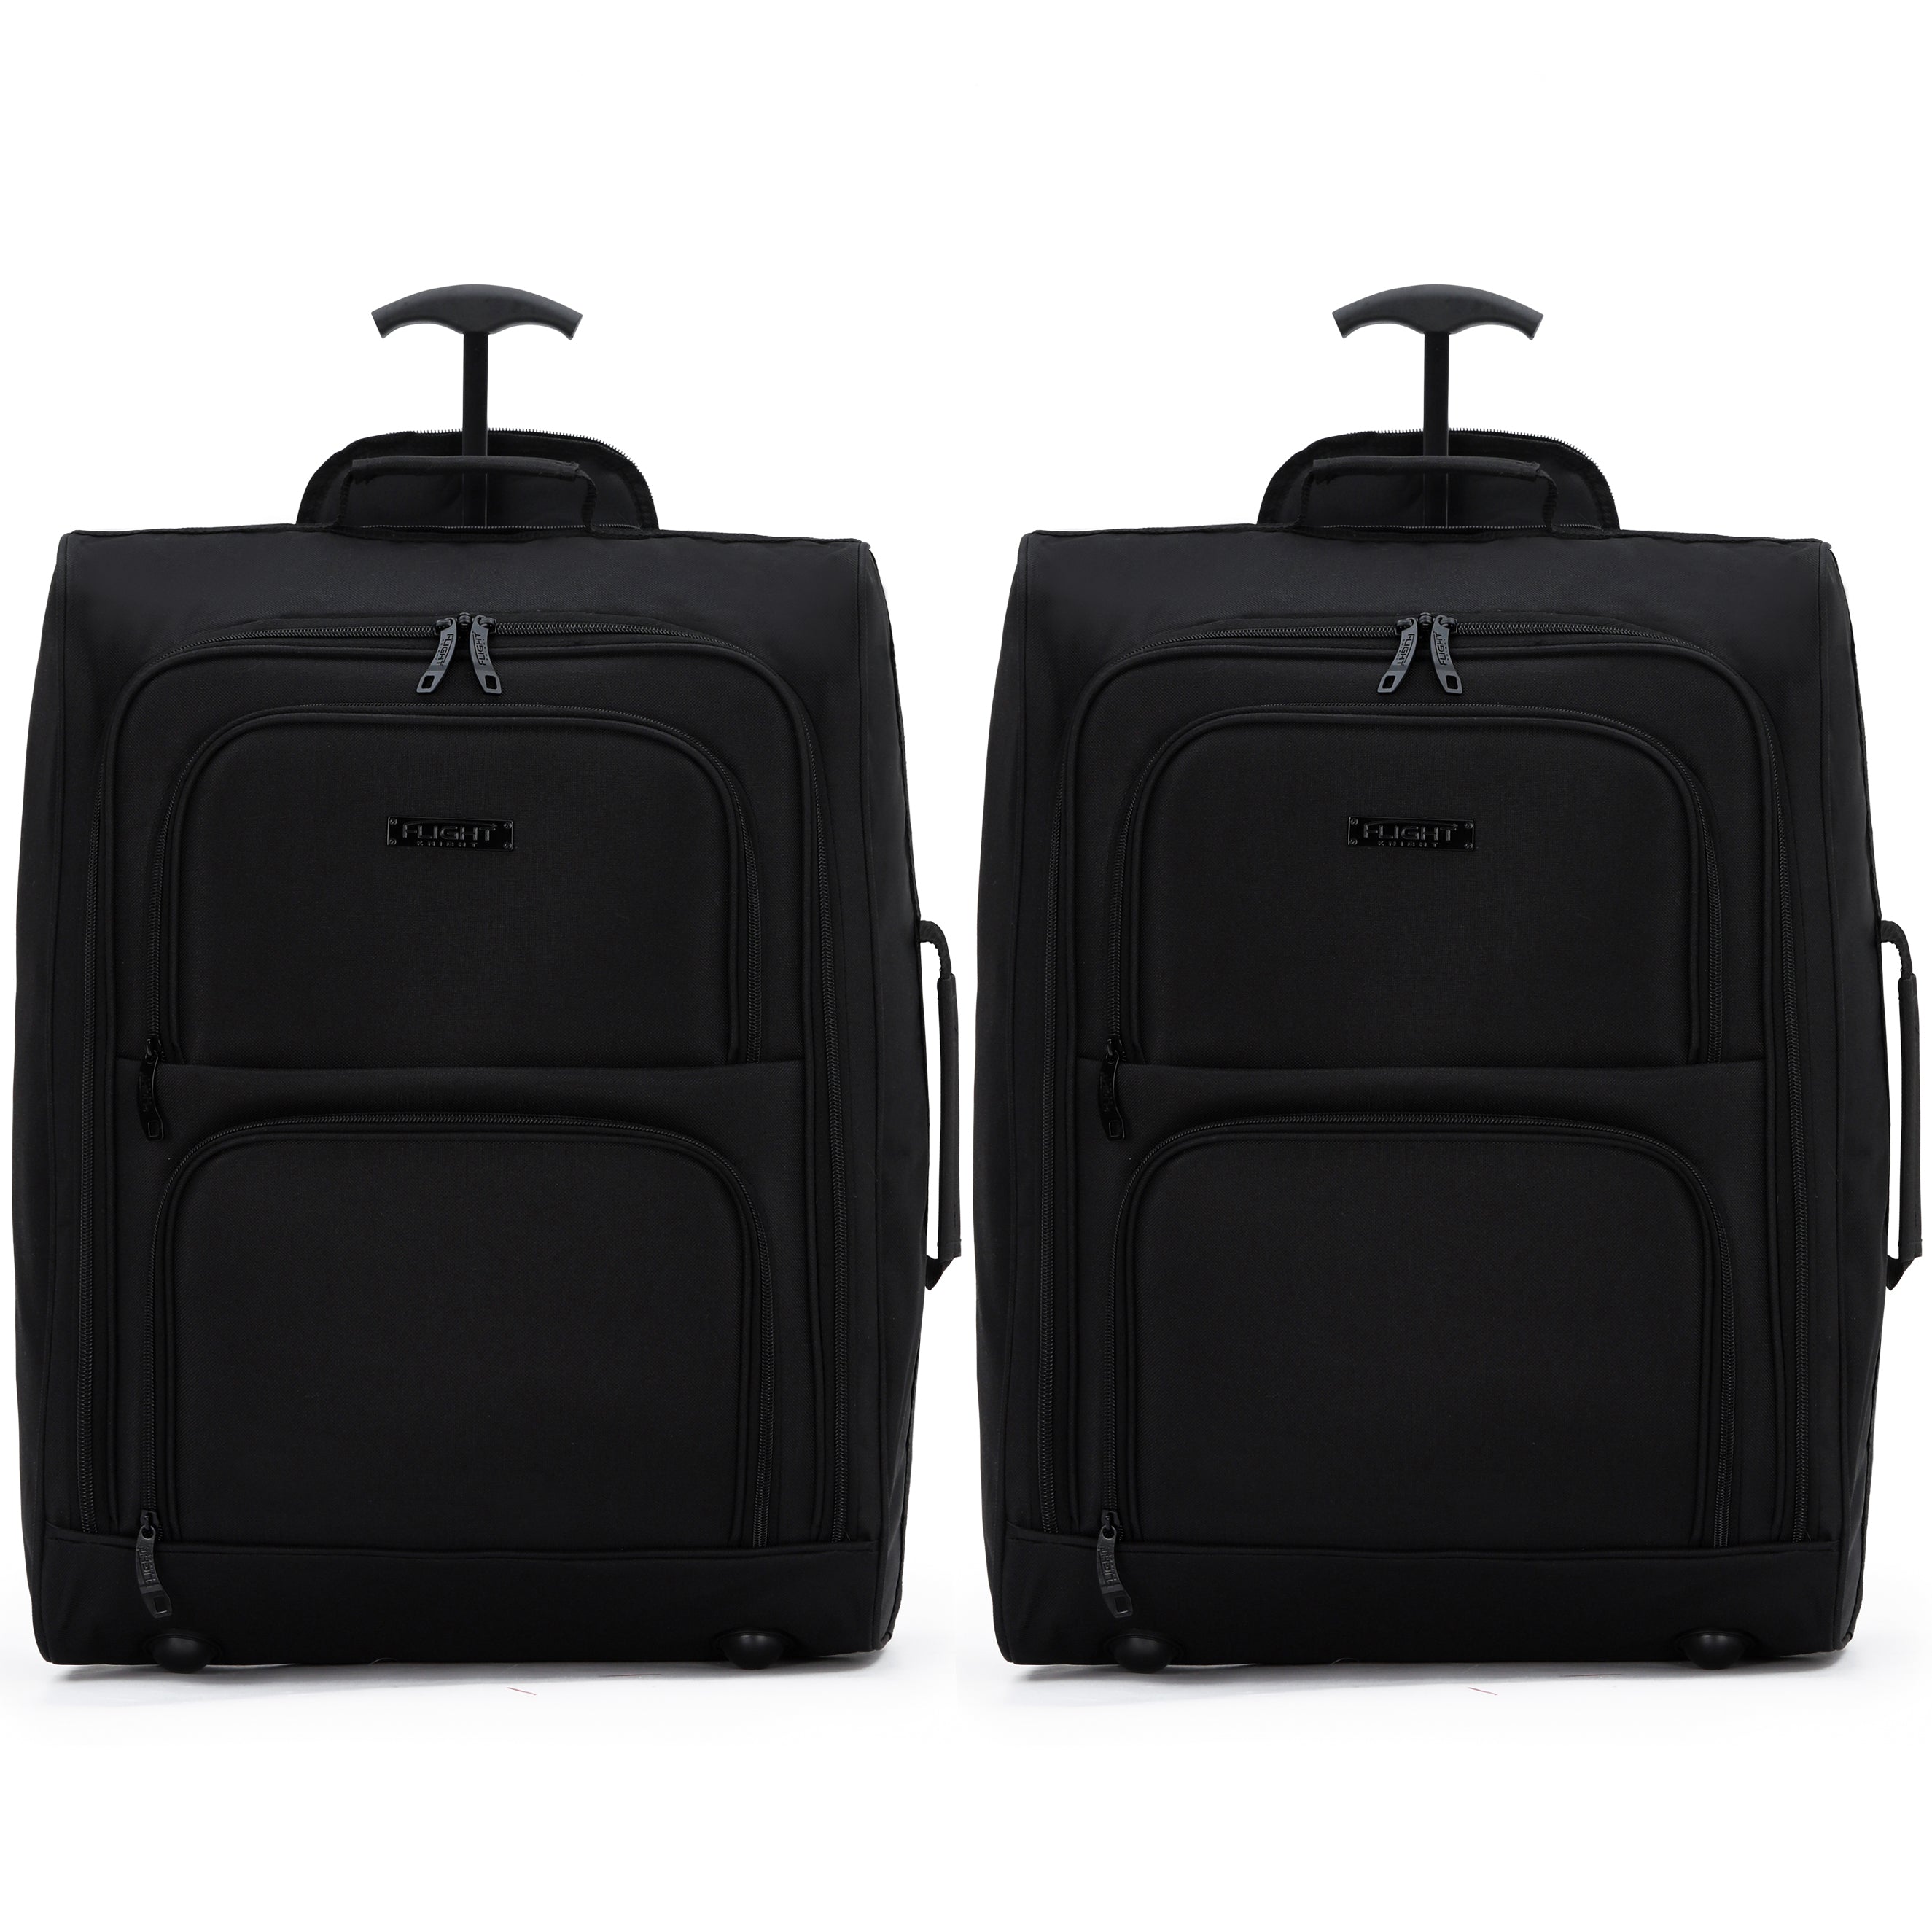 55x40x20cm 2 Wheel Soft Shell Suitcase